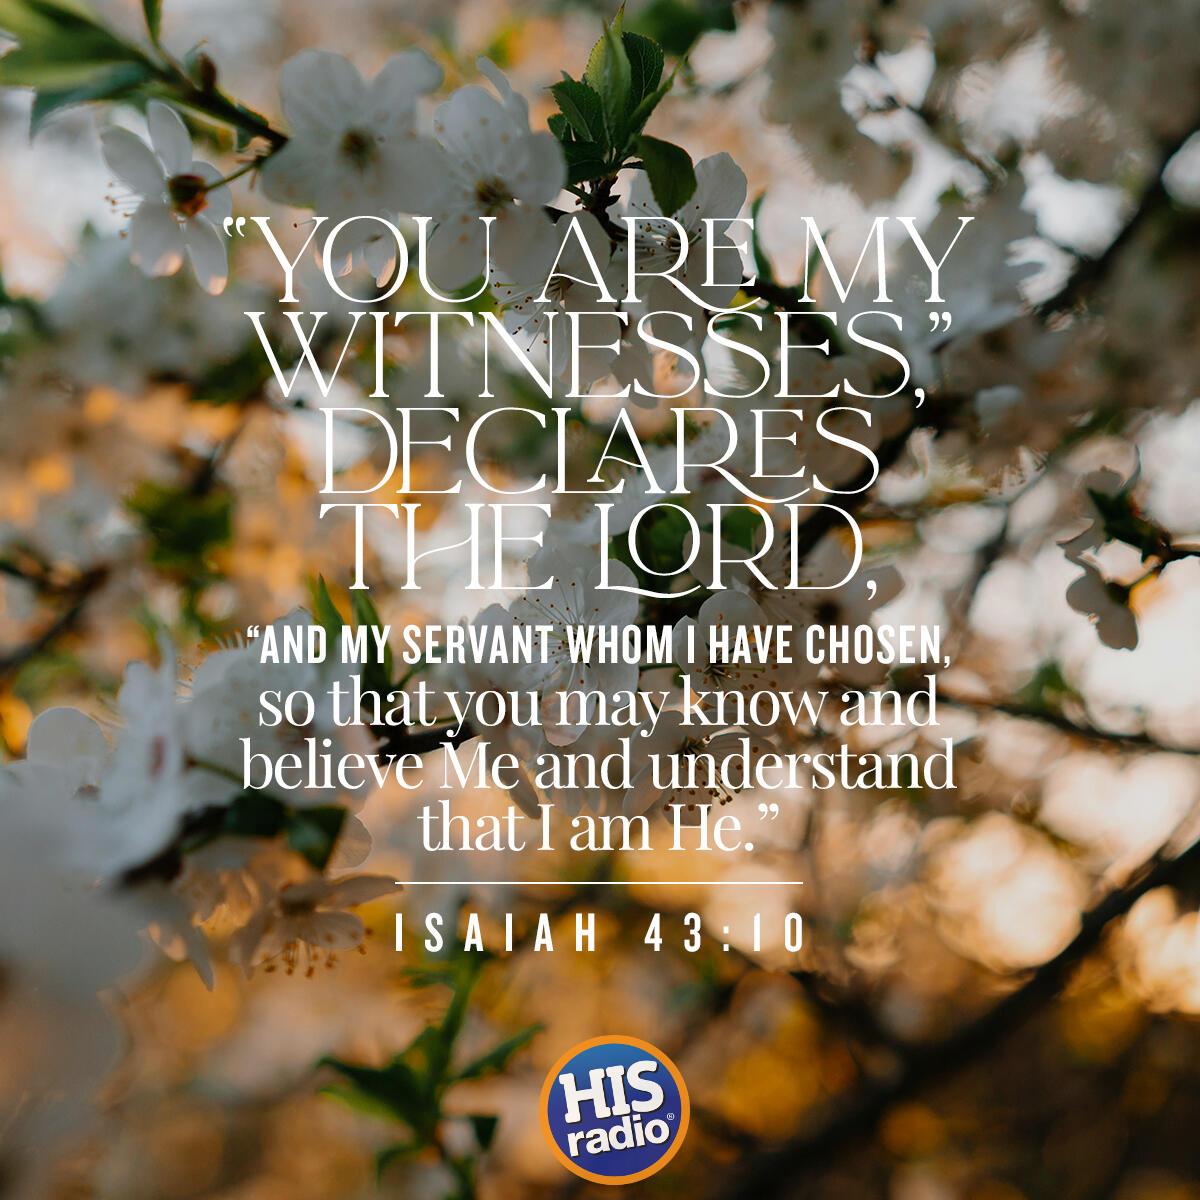 Isaiah 43:10